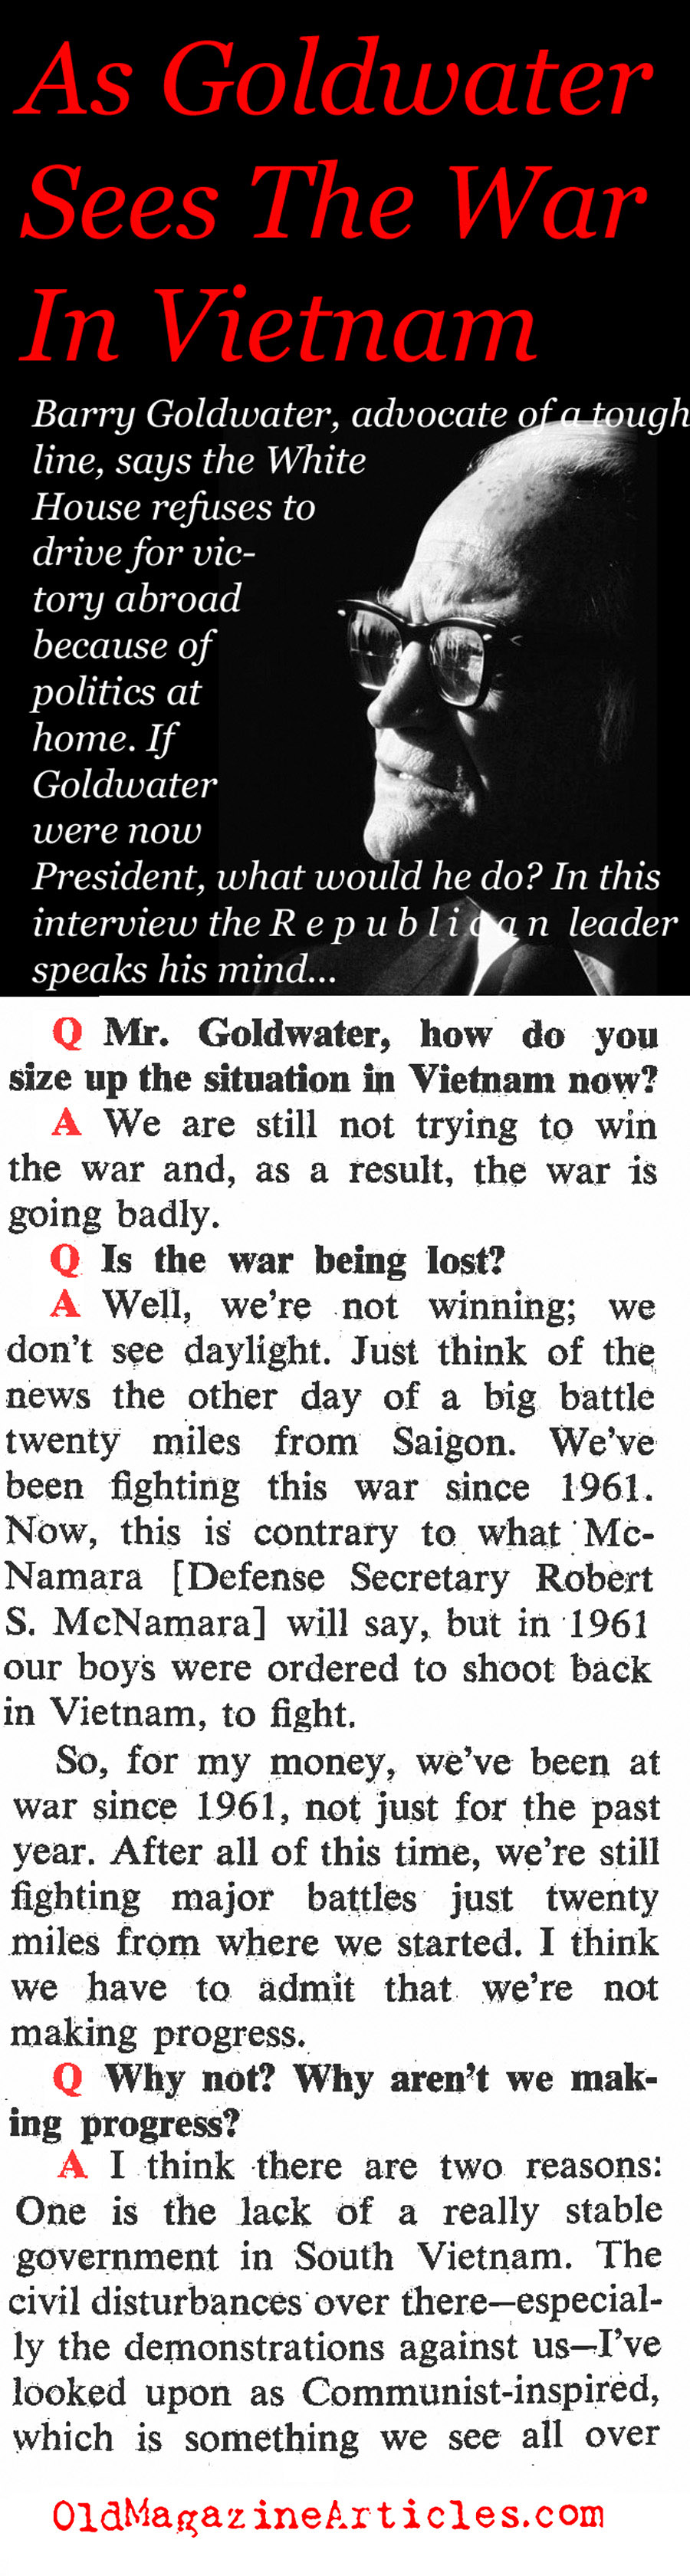 Goldwater on Vietnam (Coronet Magazine, 1966)